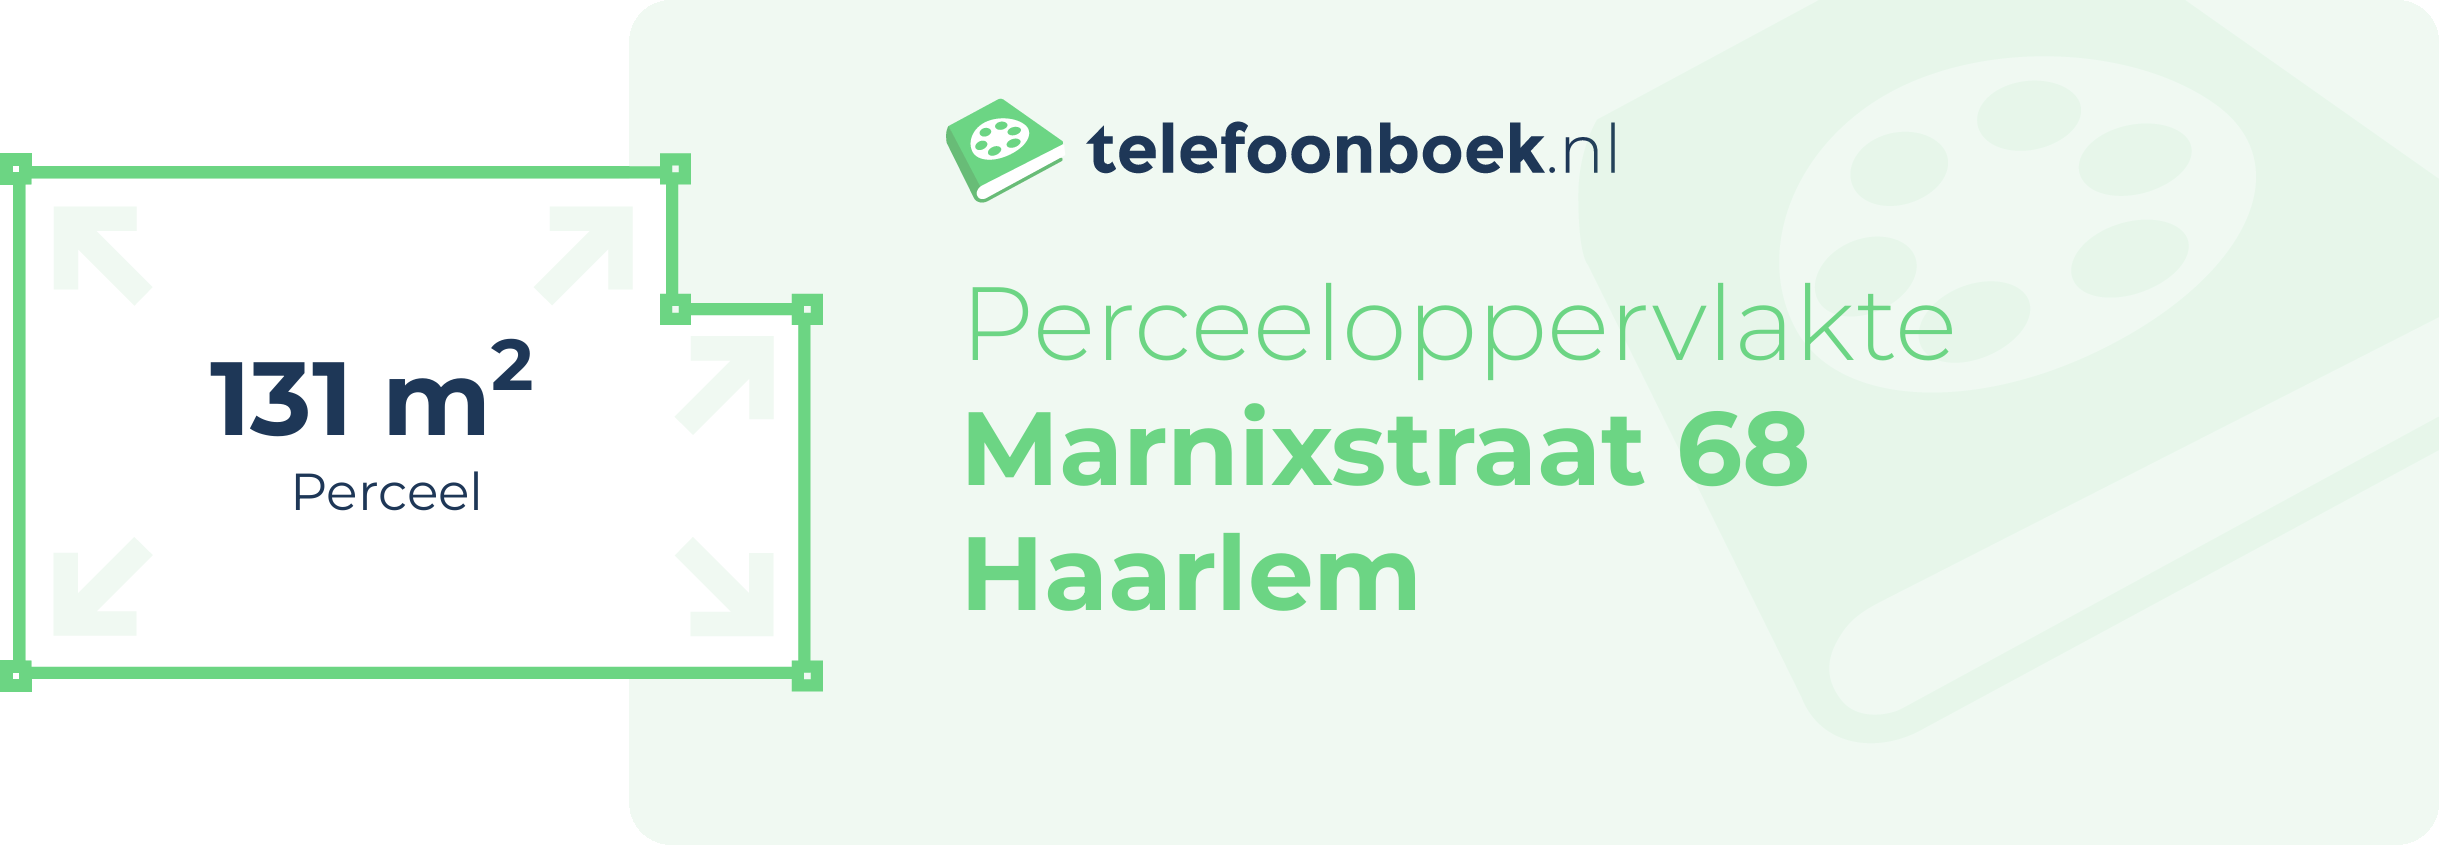 Perceeloppervlakte Marnixstraat 68 Haarlem